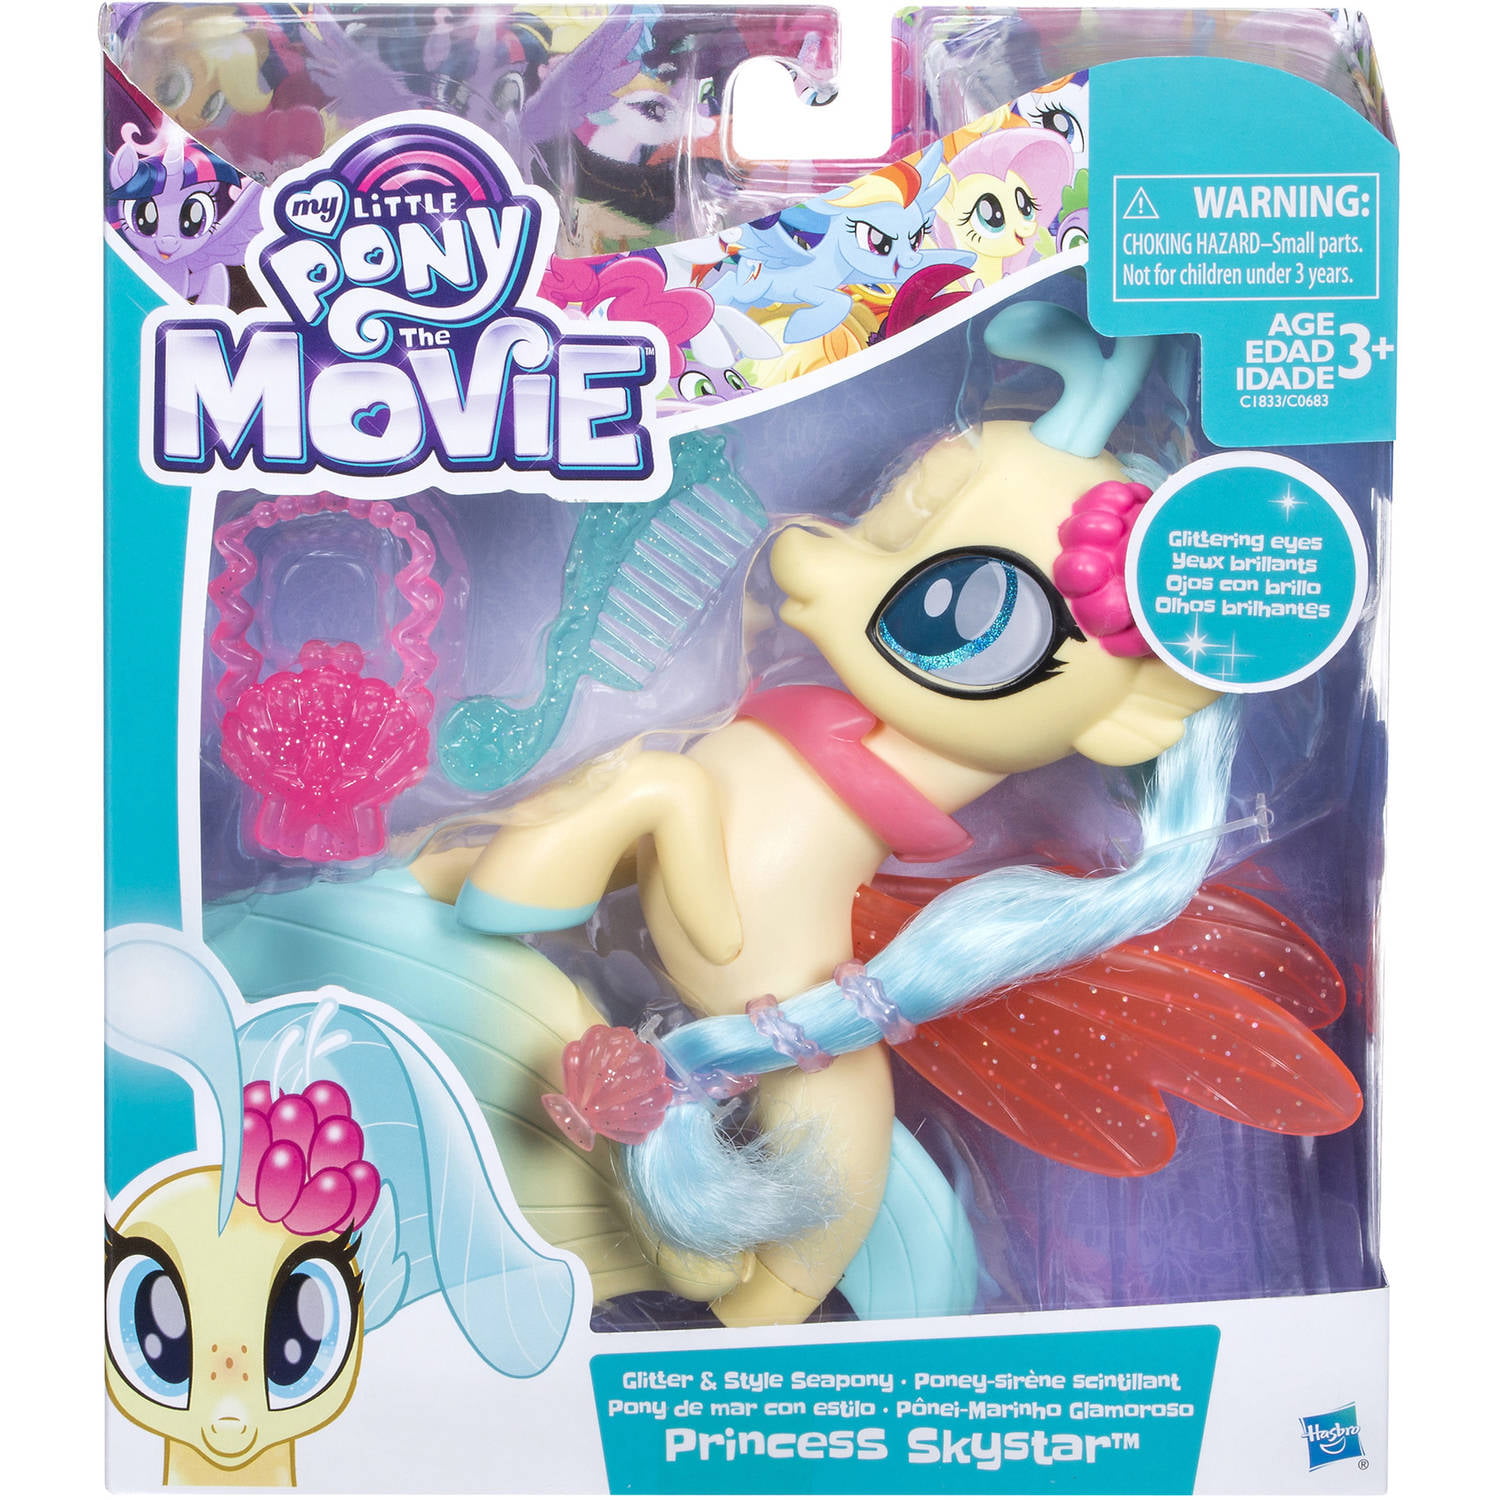 My Little Pony The Movie PINKIE PIE GLITTER /& STYLE SEAPONY MLP Toy Figure /& Acc